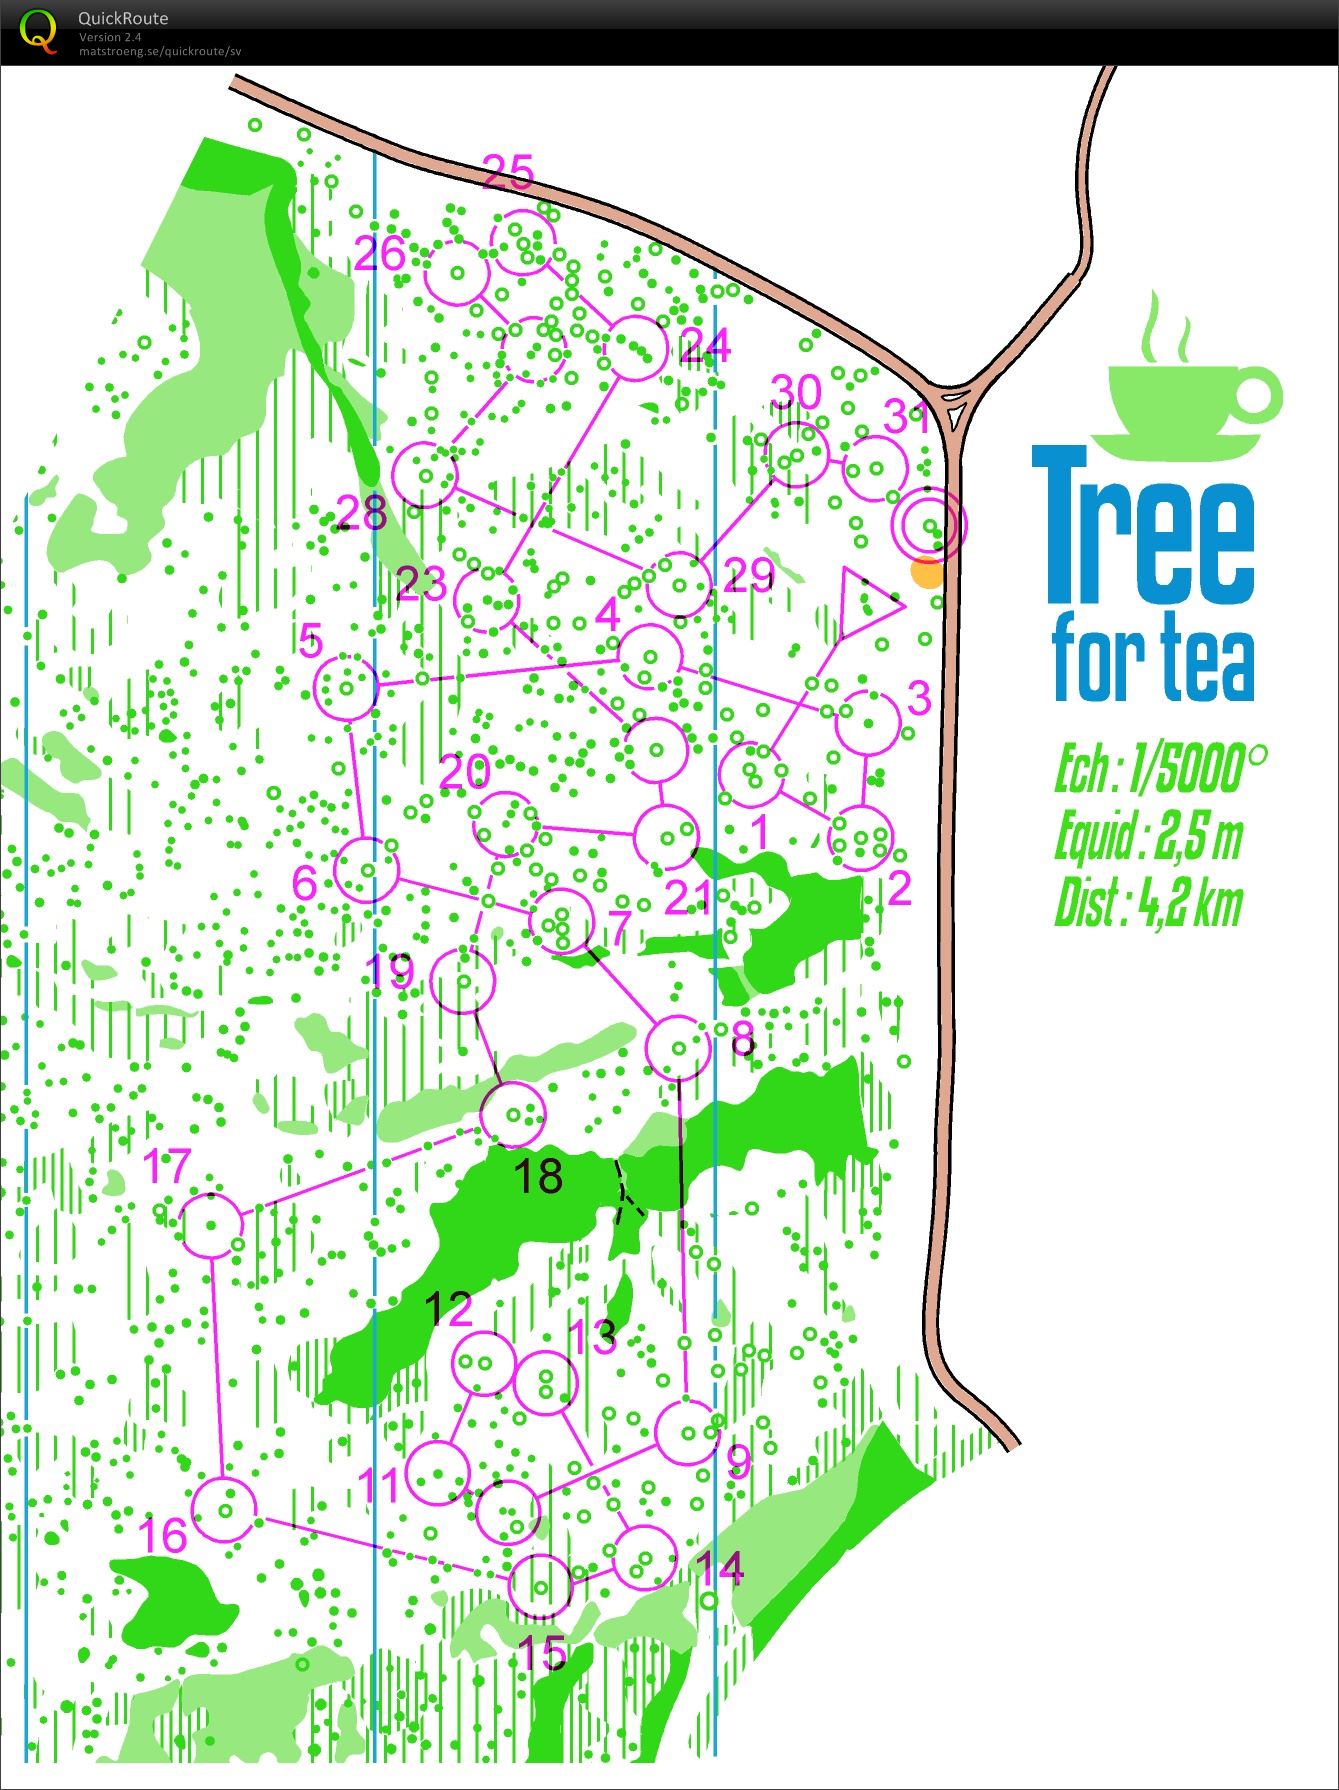 Tree for Tea (21/01/2016)